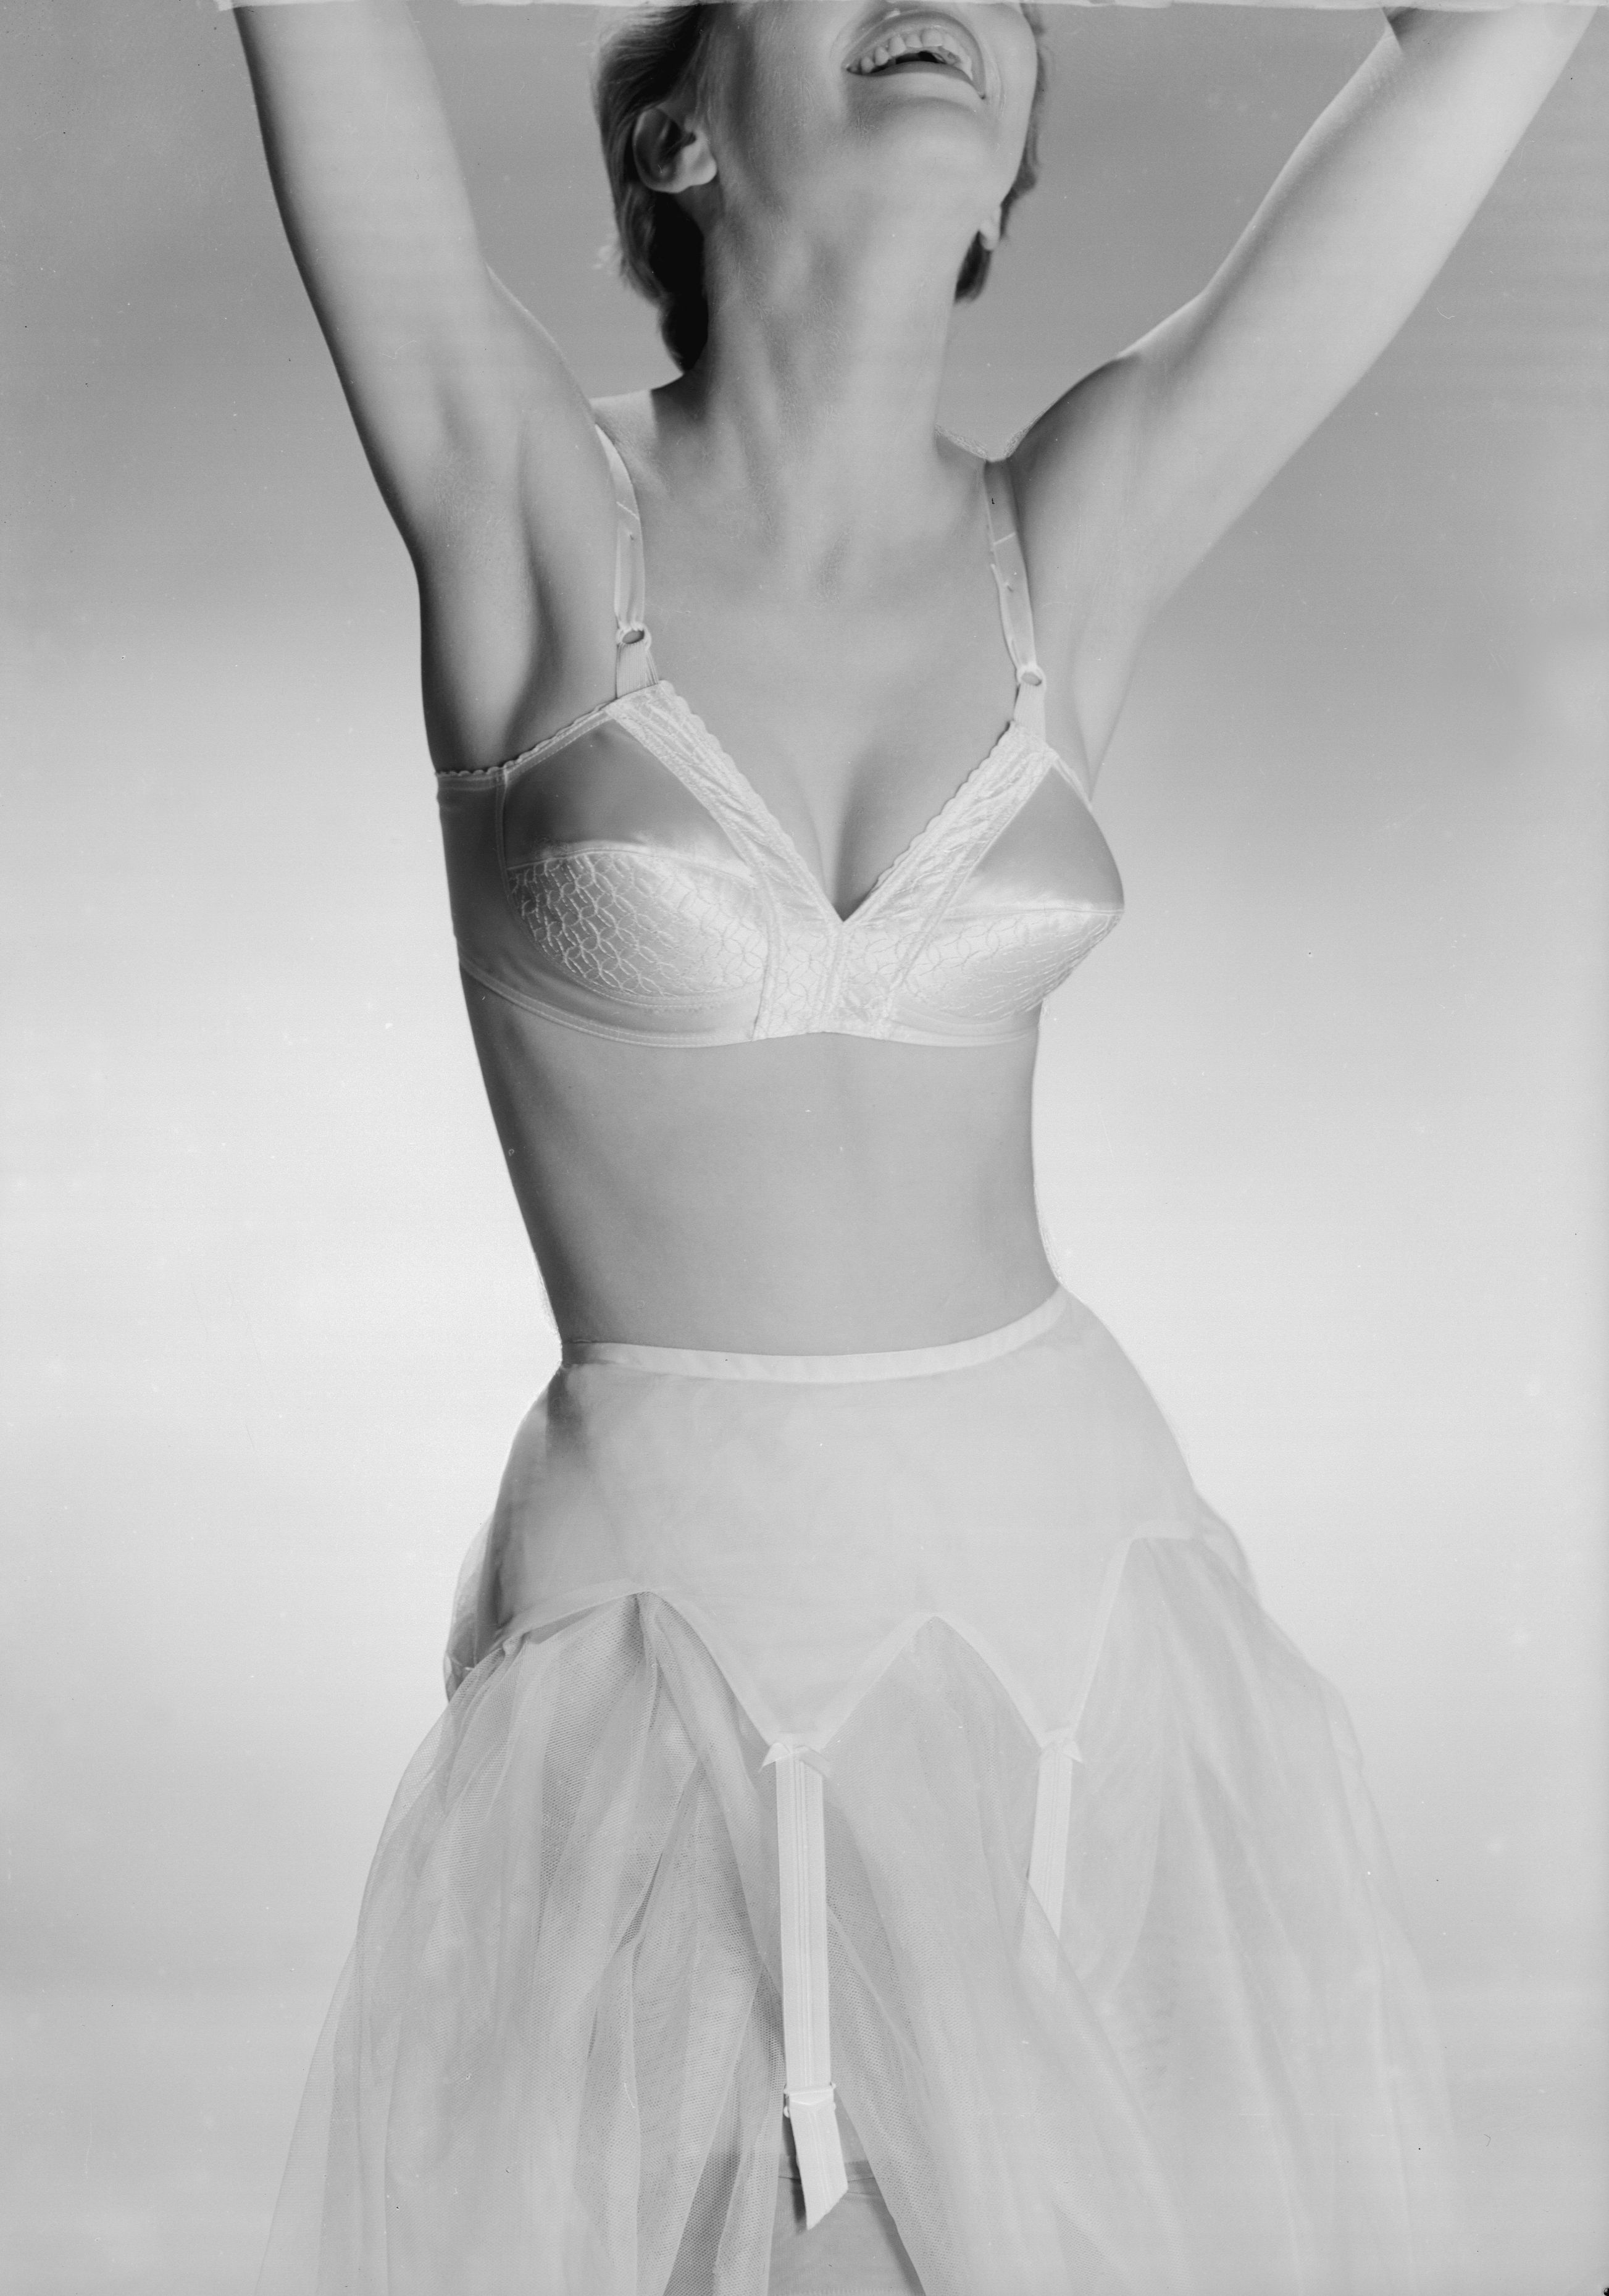 Pointy bras make a comeback as sales of 'Marilyn Monroe' underwear enjoy an  uplift